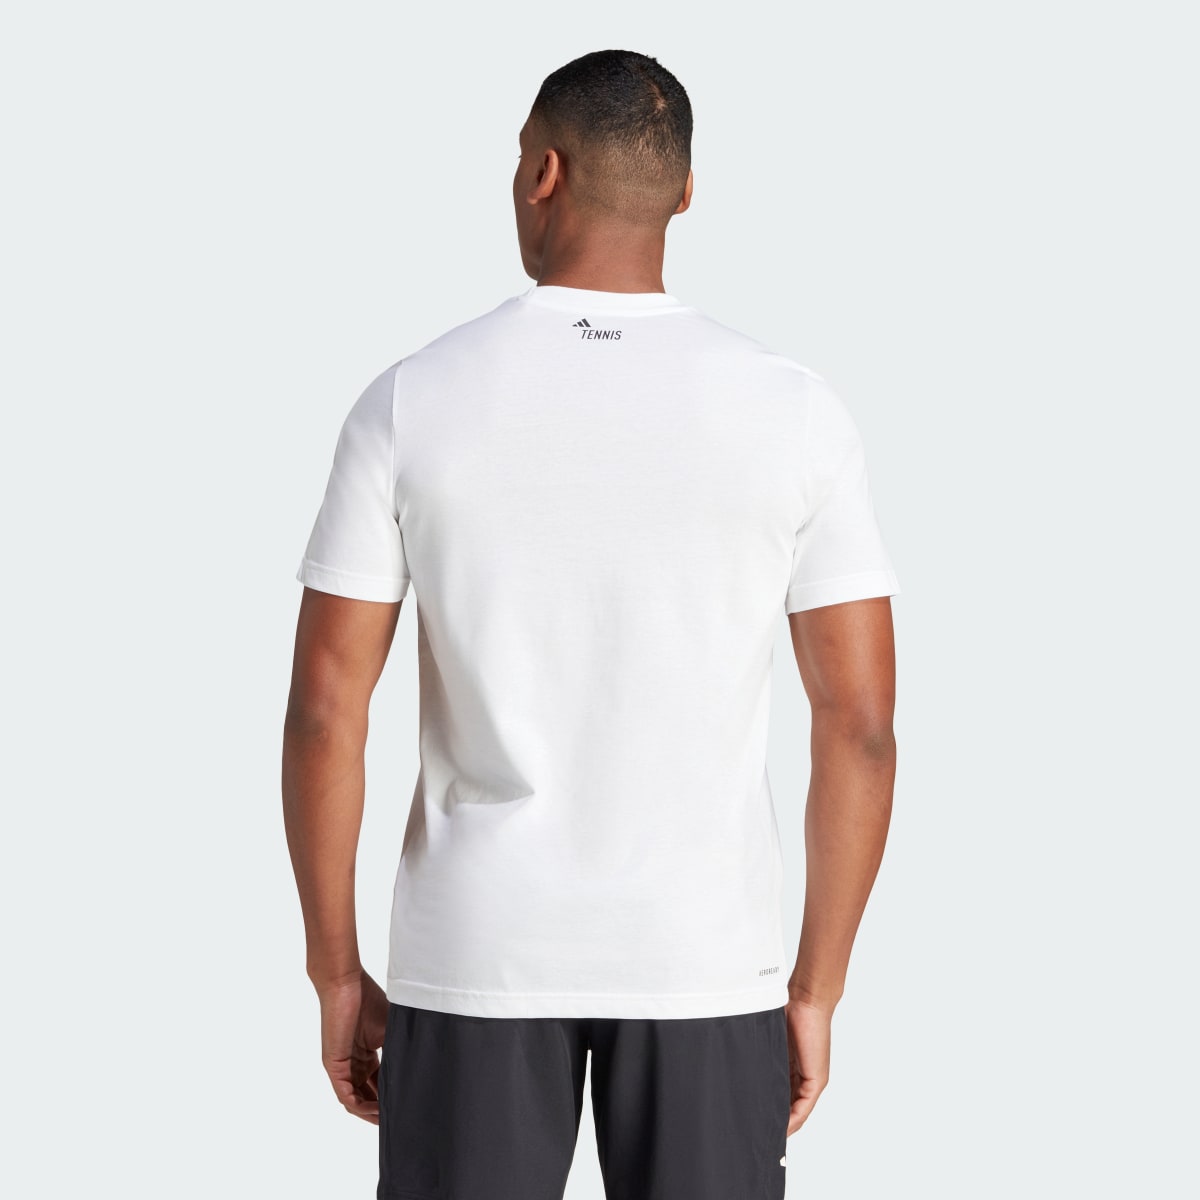 Adidas AEROREADY Tennis Graphic T-Shirt. 4